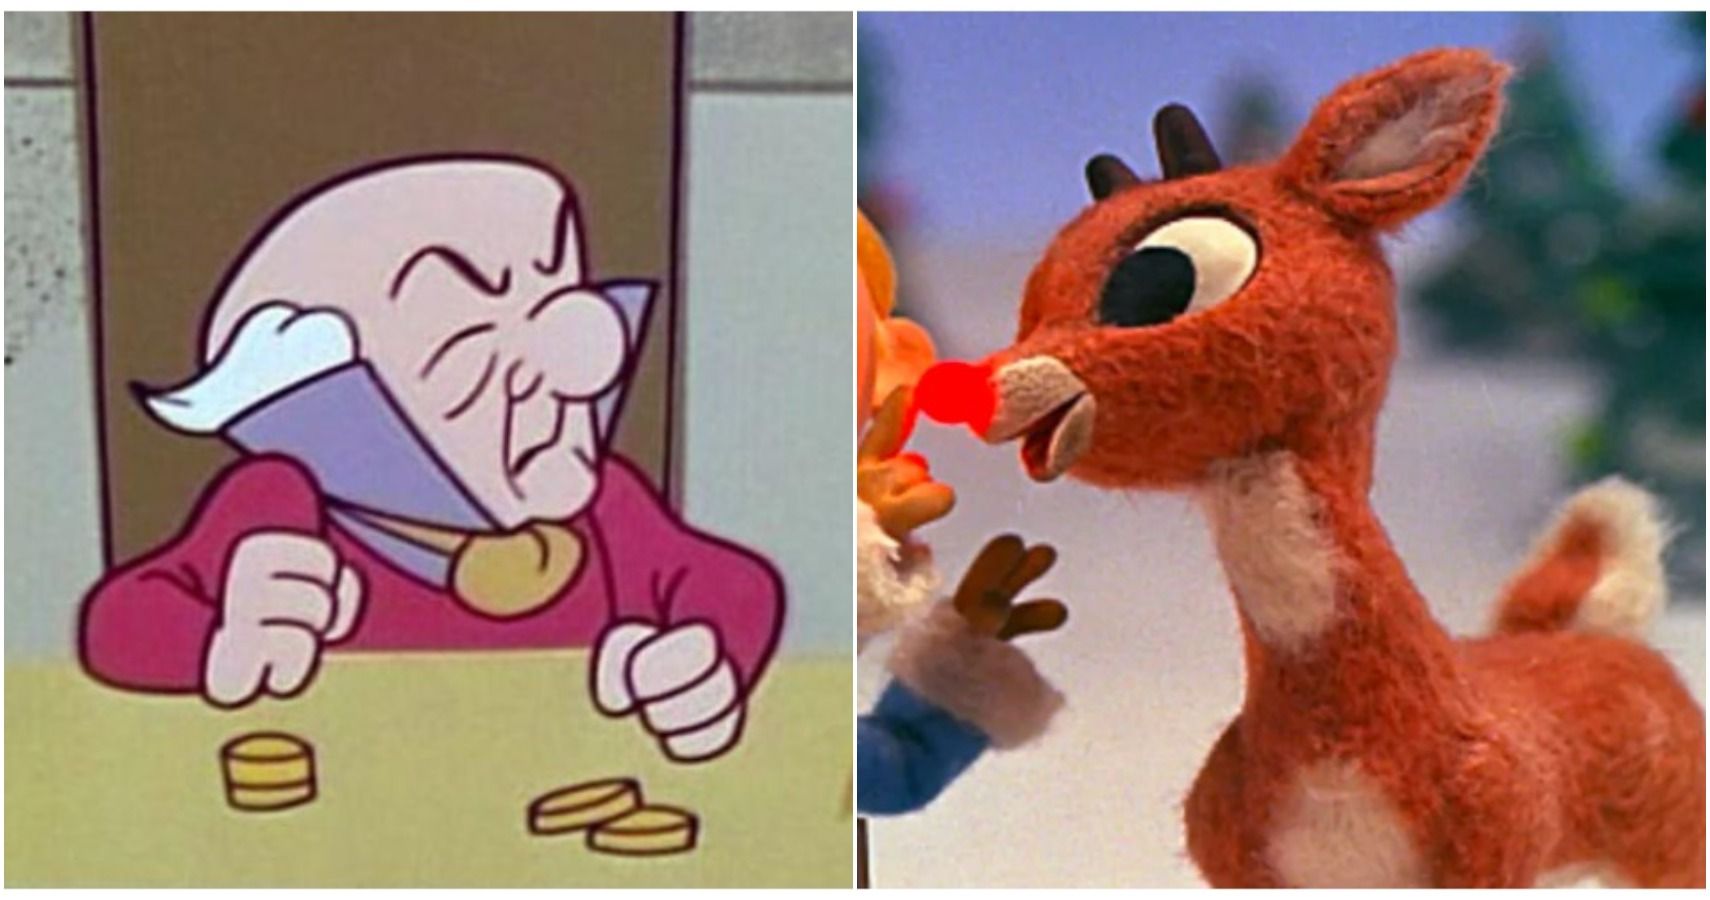 The 10 Best Animated Christmas Movies Ever According To Imdb